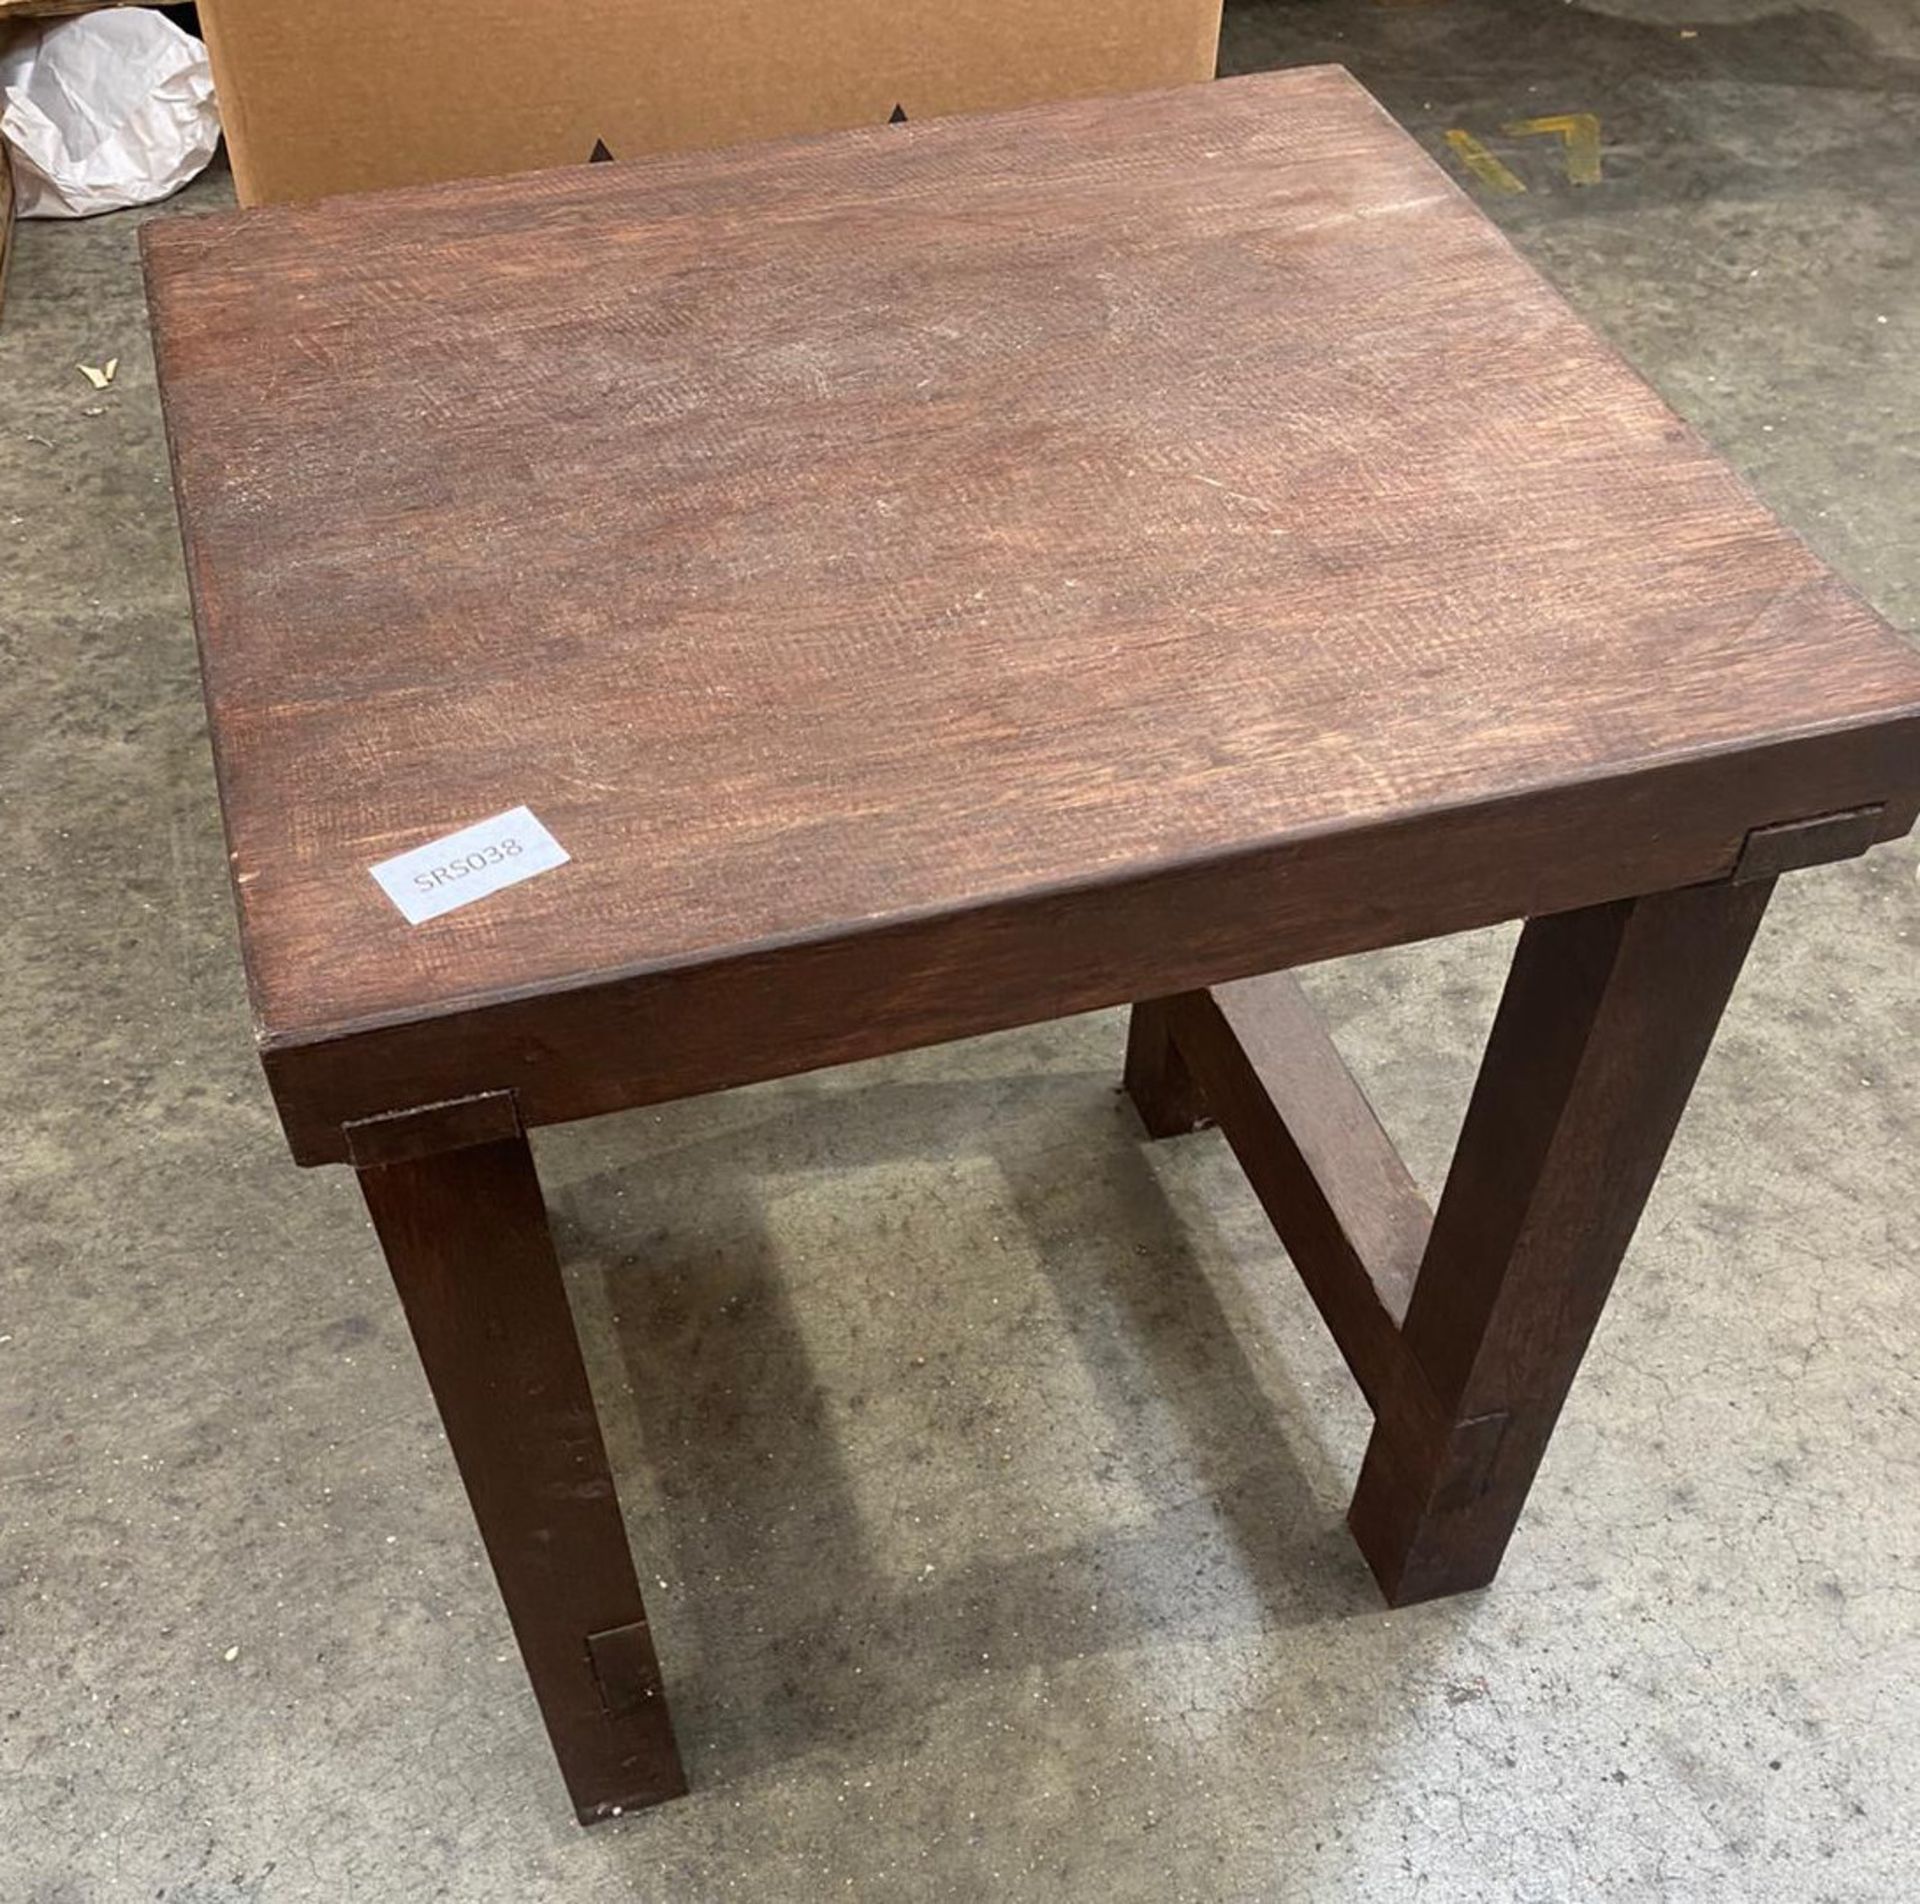 1 x Meranti Wood Occasional Table - Size: 500 x 500 x 600mm